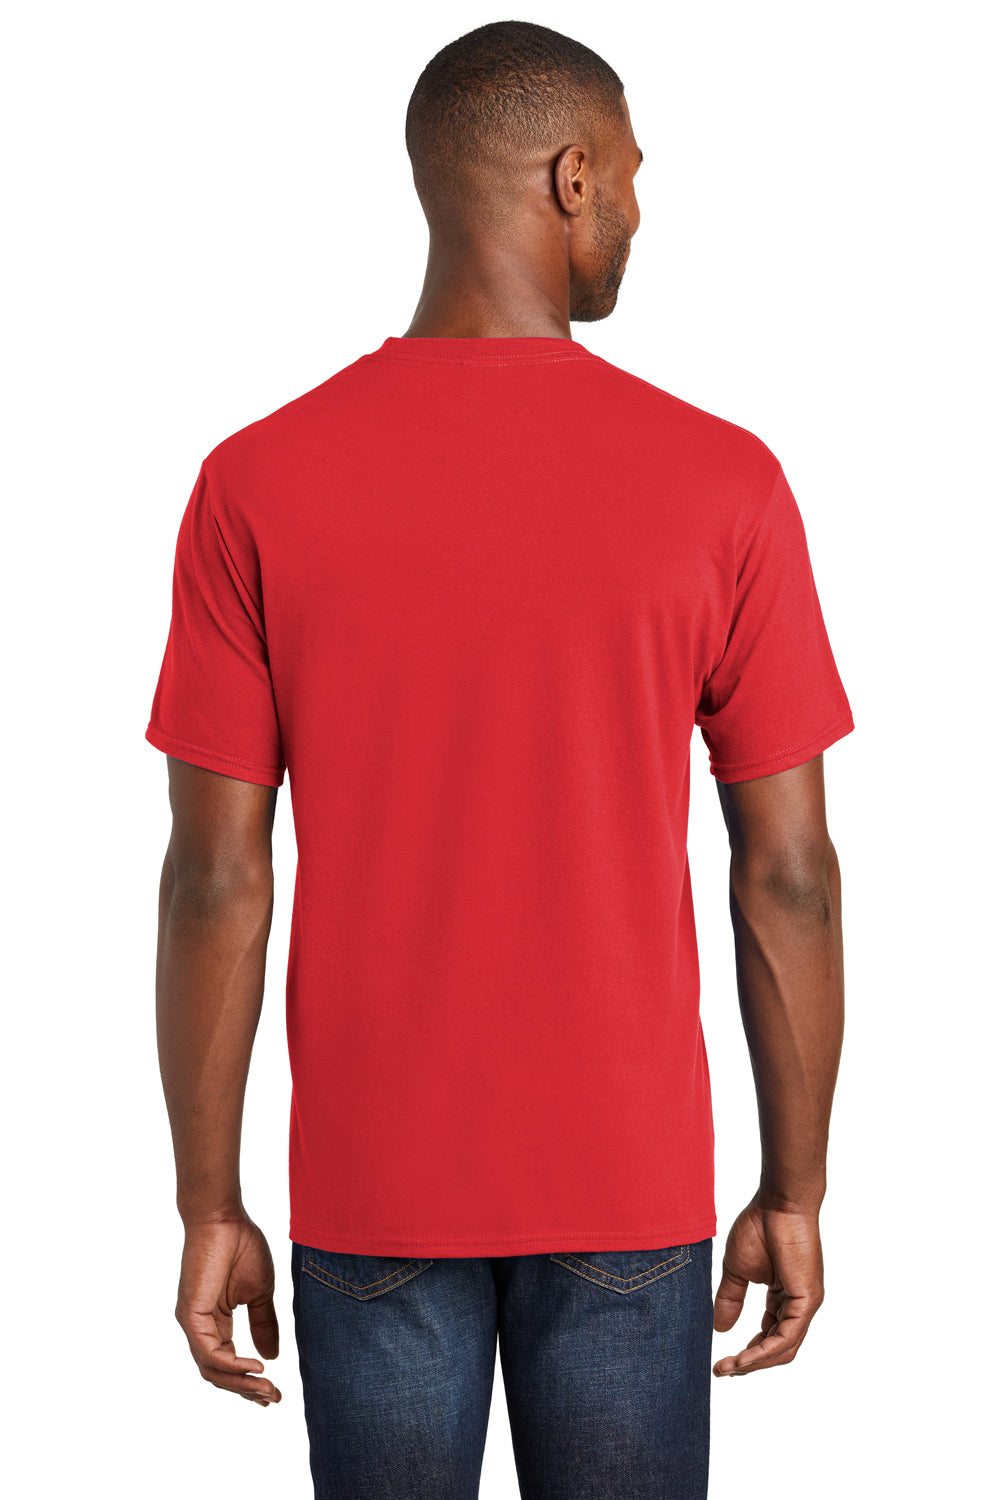 Port & Company PC450 Mens Fan Favorite Short Sleeve Crewneck T-Shirt Red Back